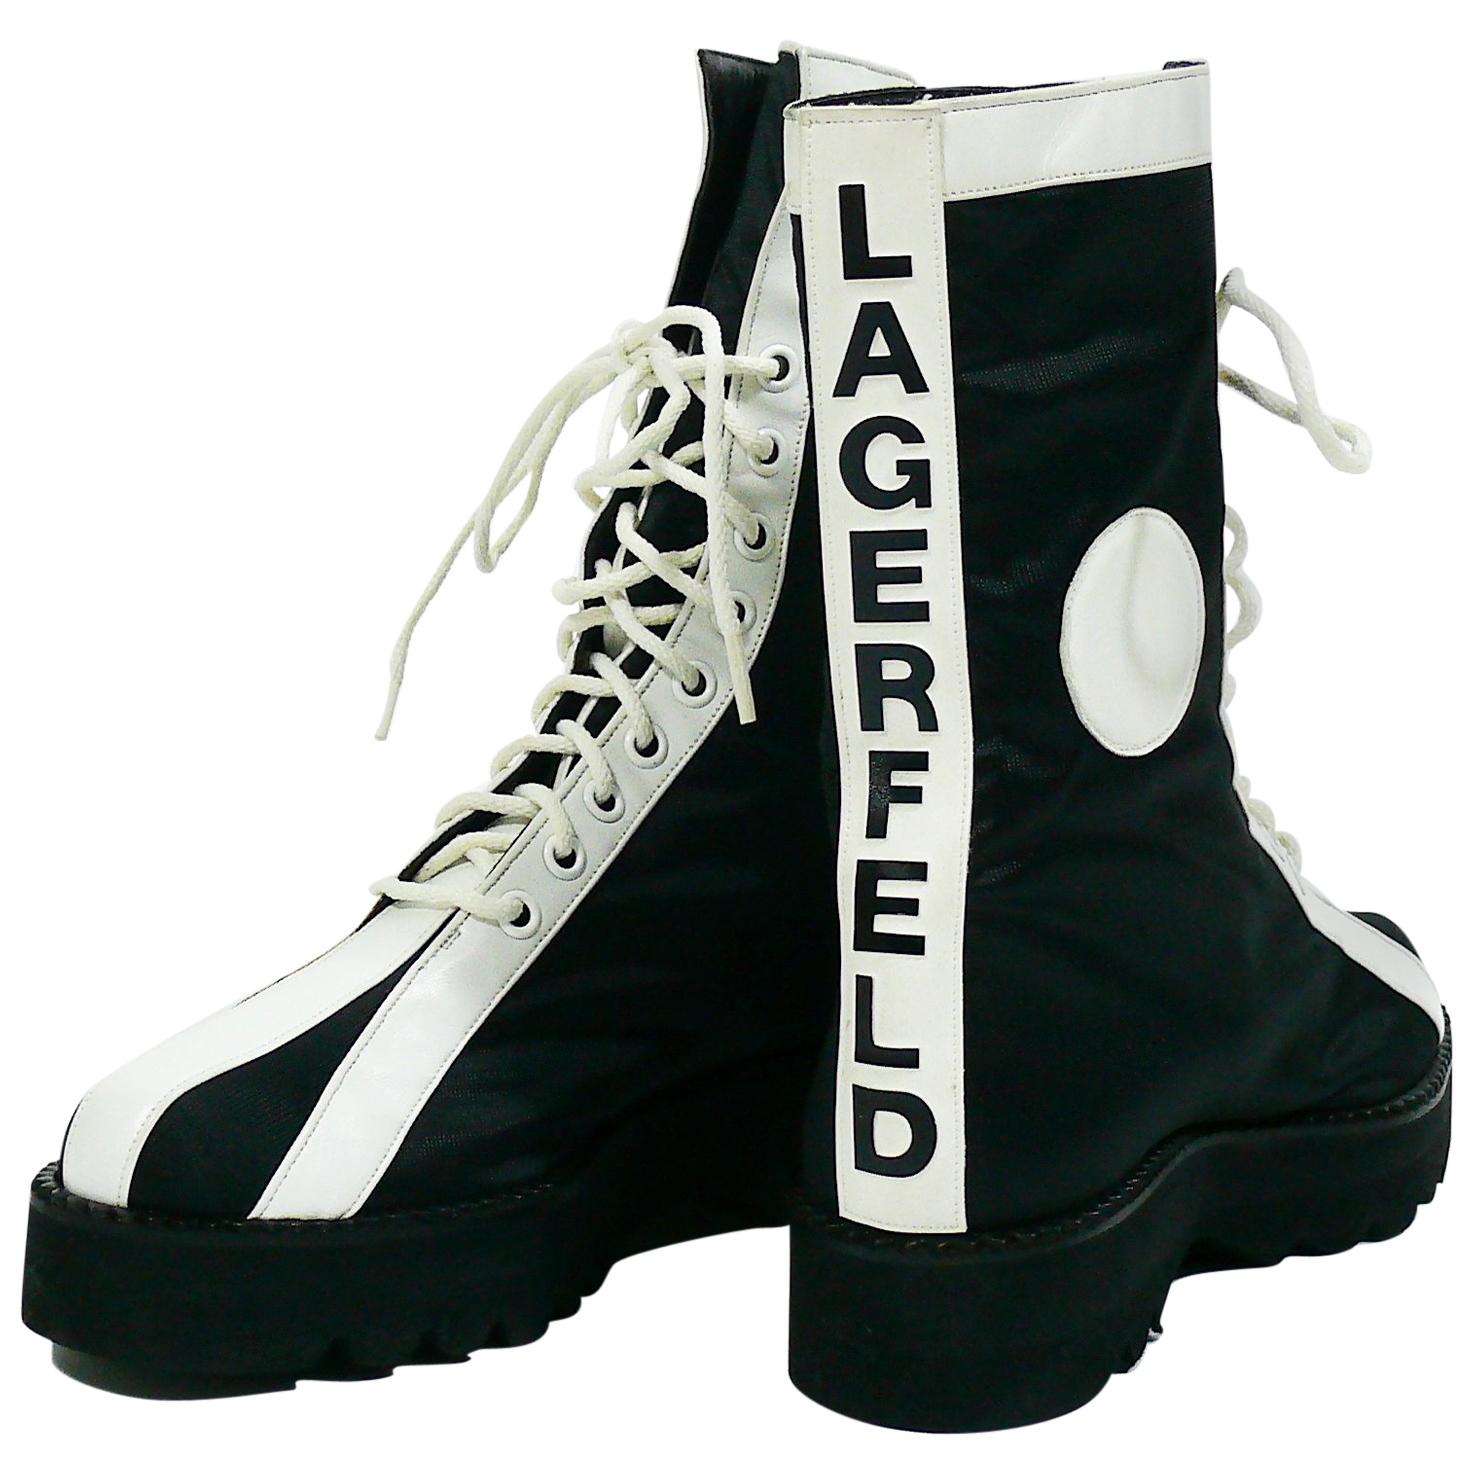 karl lagerfeld combat boots